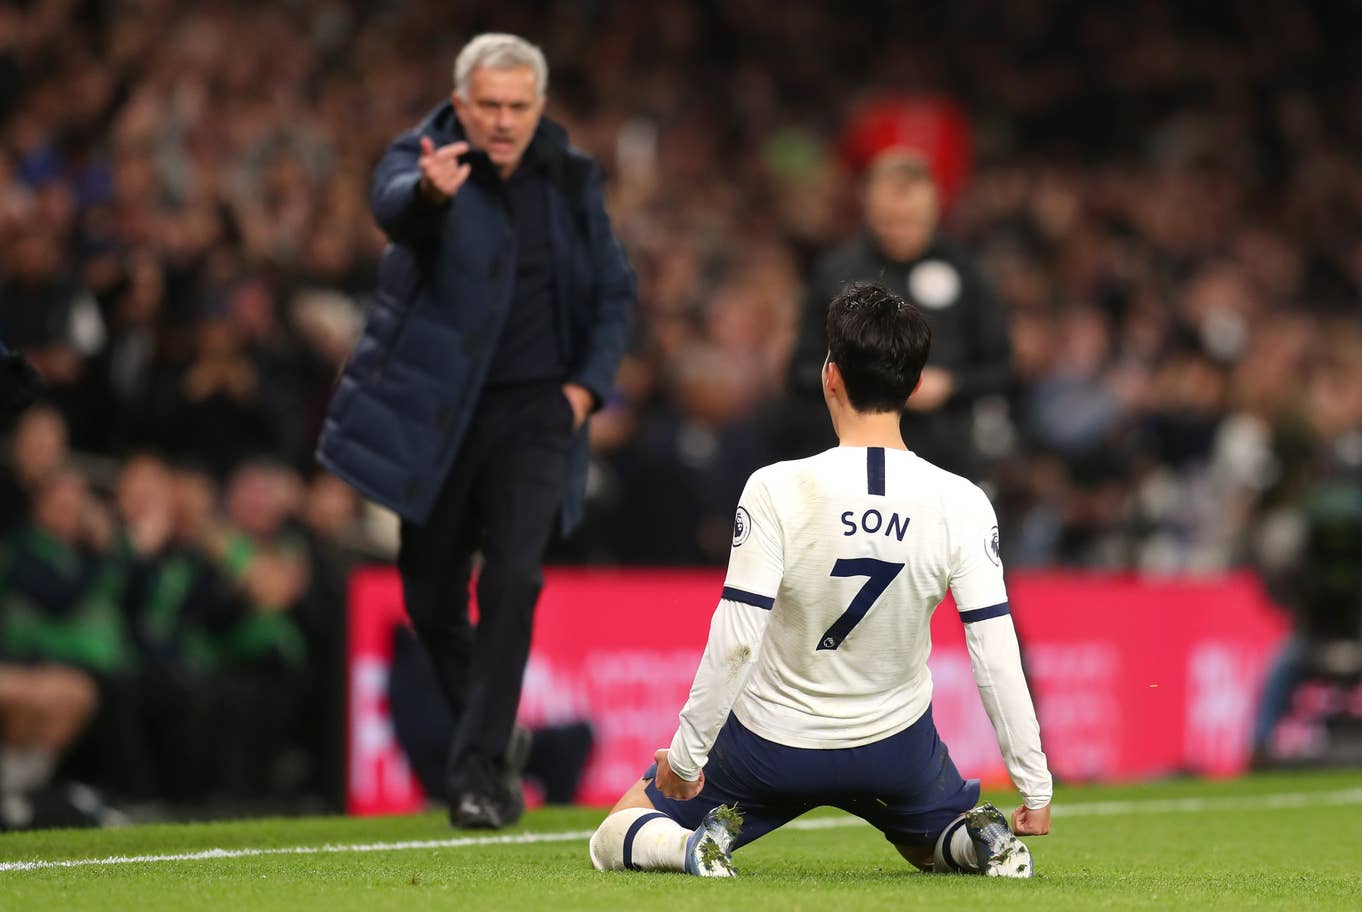 Jose Mourinho regrets becoming Tottenham manager, claims Paul Merson - Bóng Đá